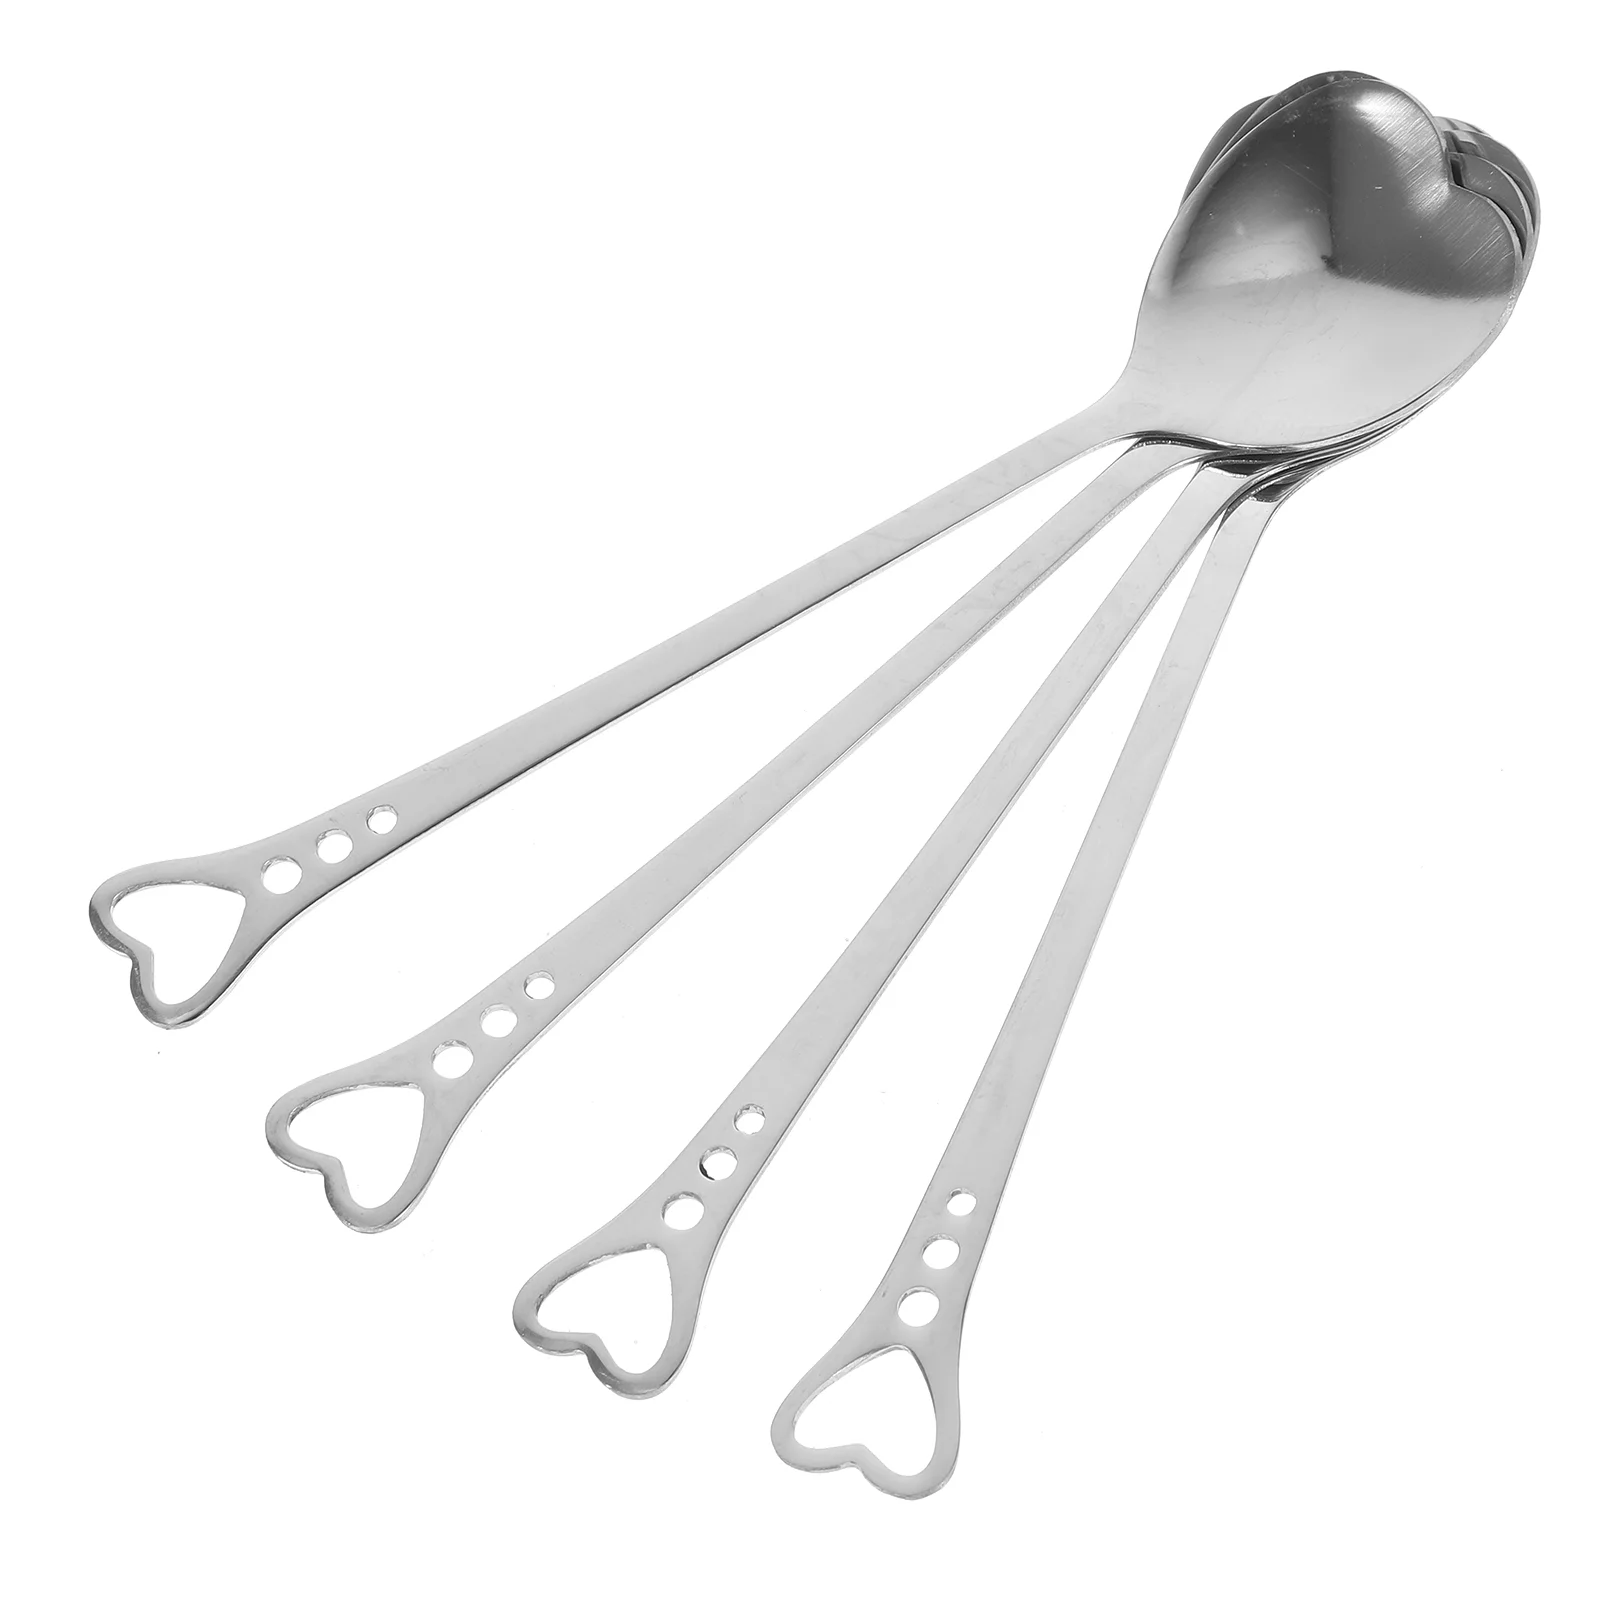 

Kichvoe Jam Set 4Pcs Heart Shape Spoons Coffee Spoon Stainless Steel Teaspoons Cocktail Stirring Spoon Mixing Spoon Ice